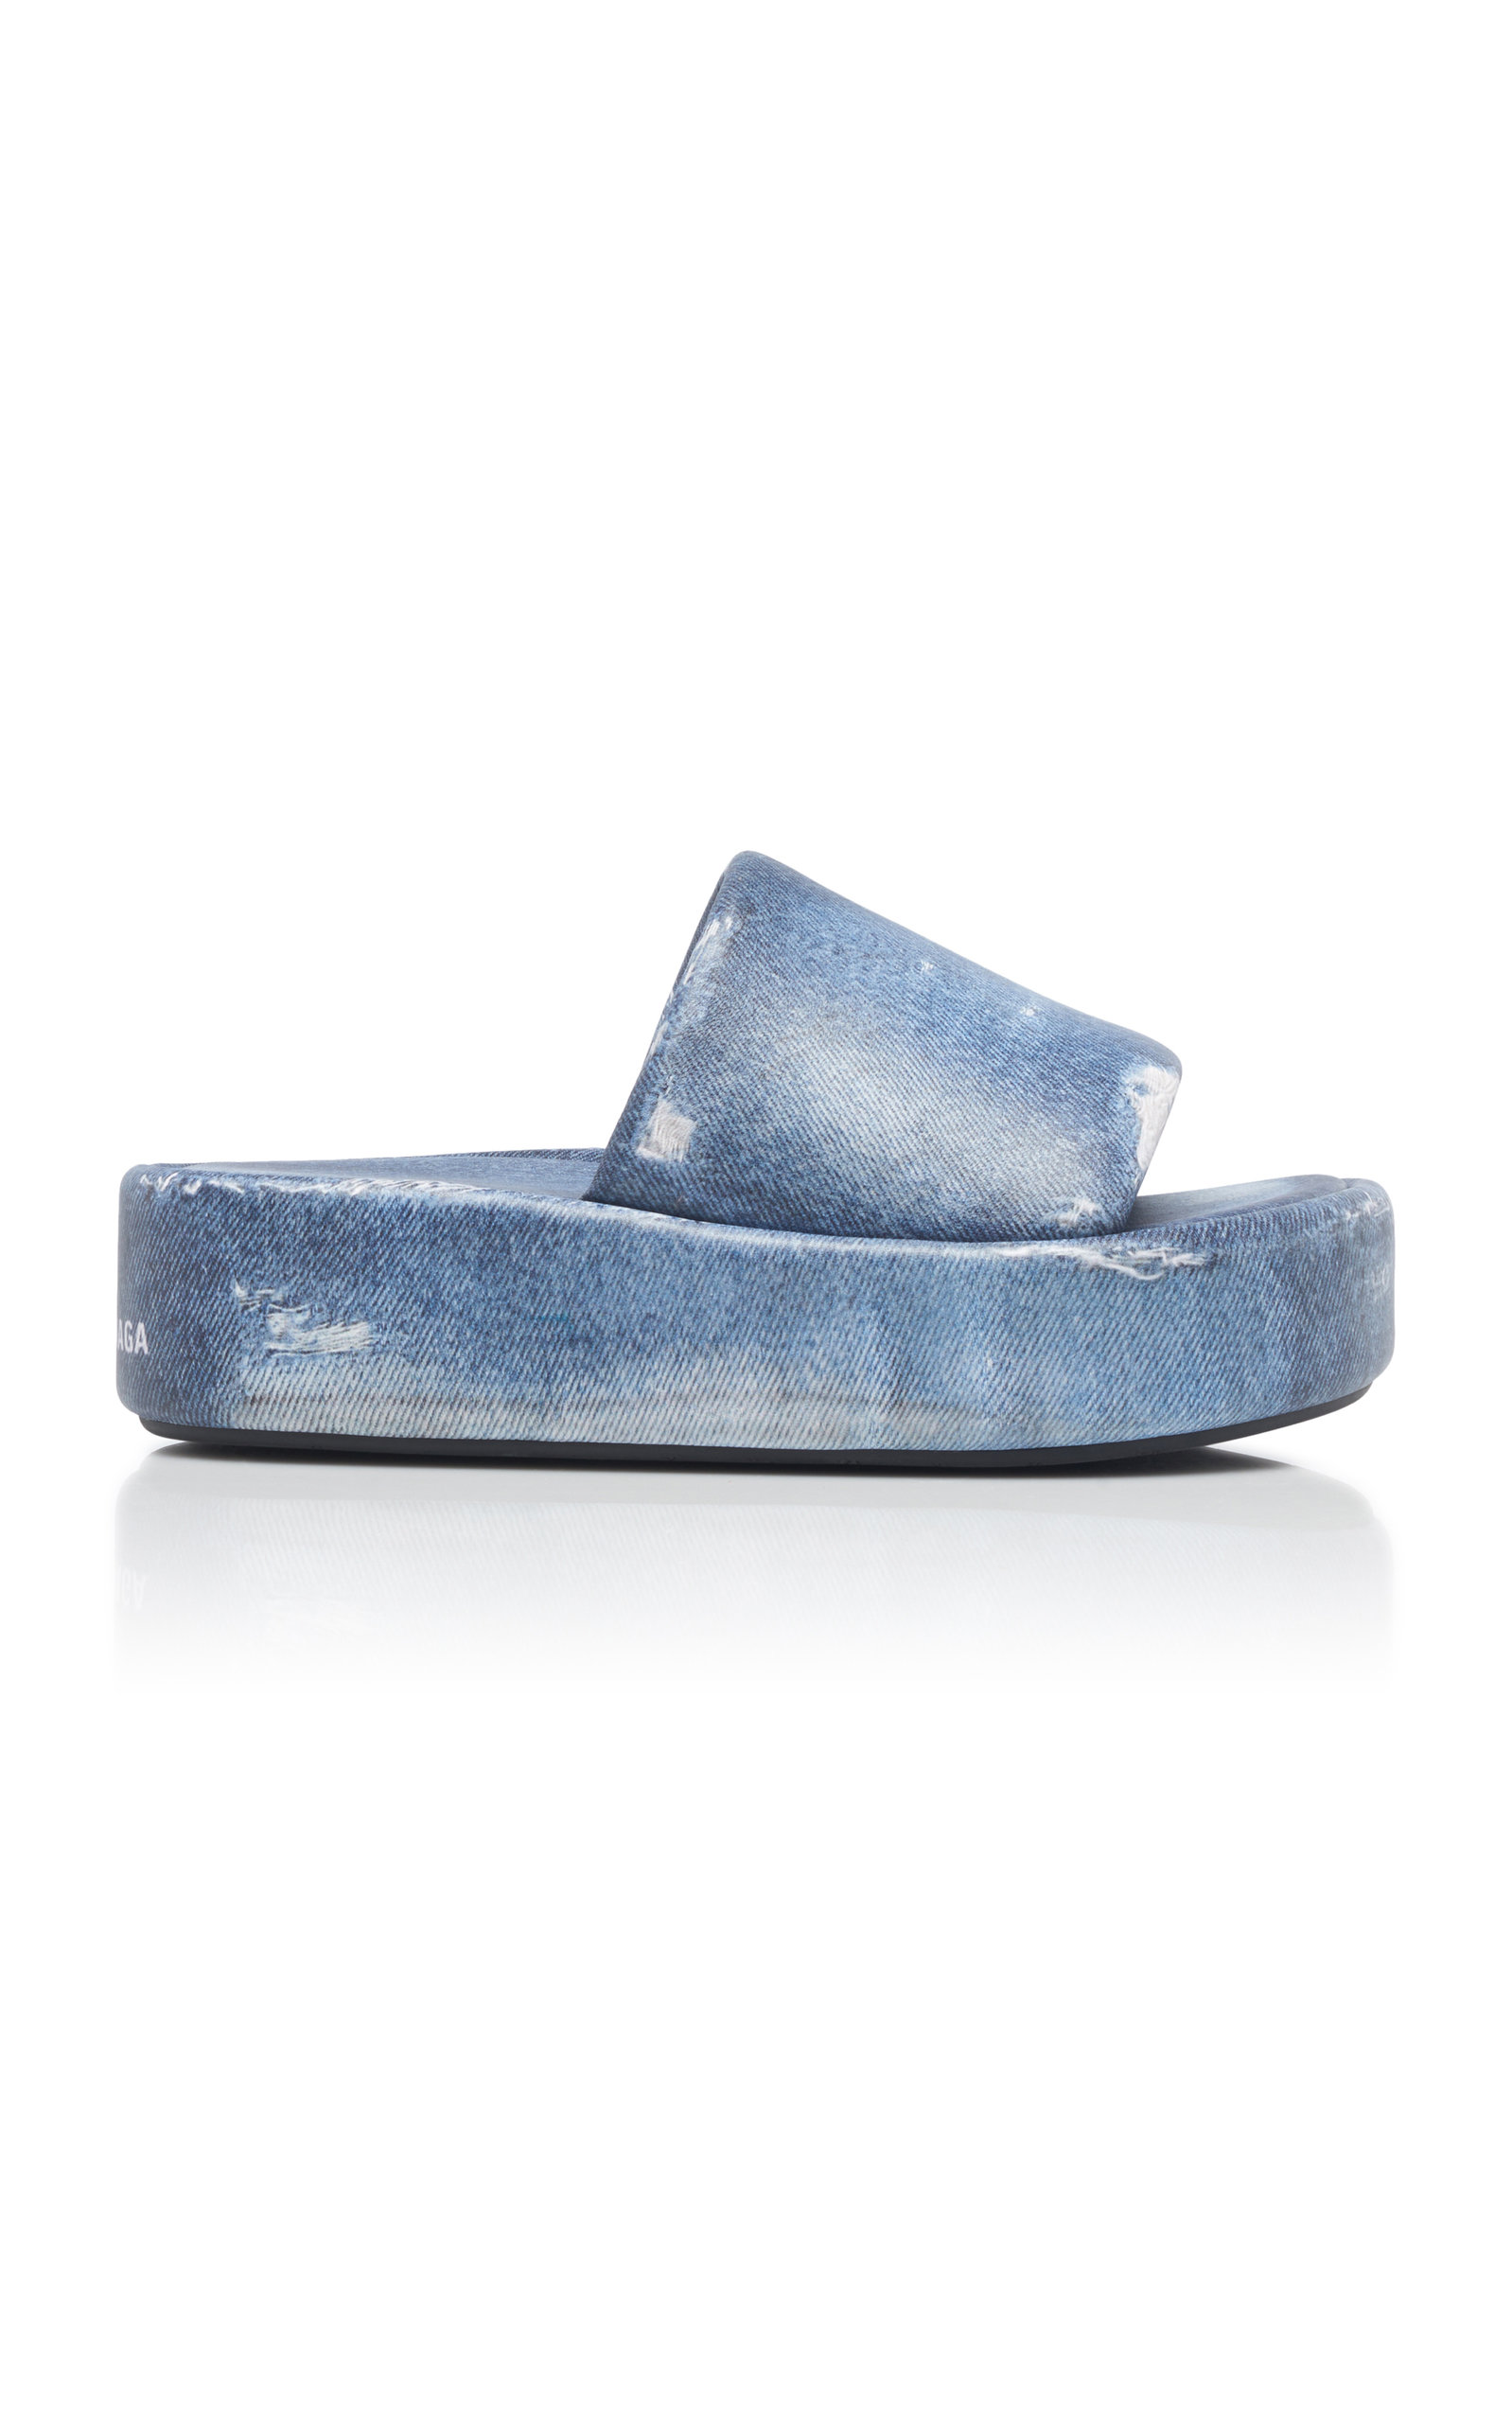 Balenciaga - Denim Leather Slide Sandals - Blue - IT 38 - Moda Operandi